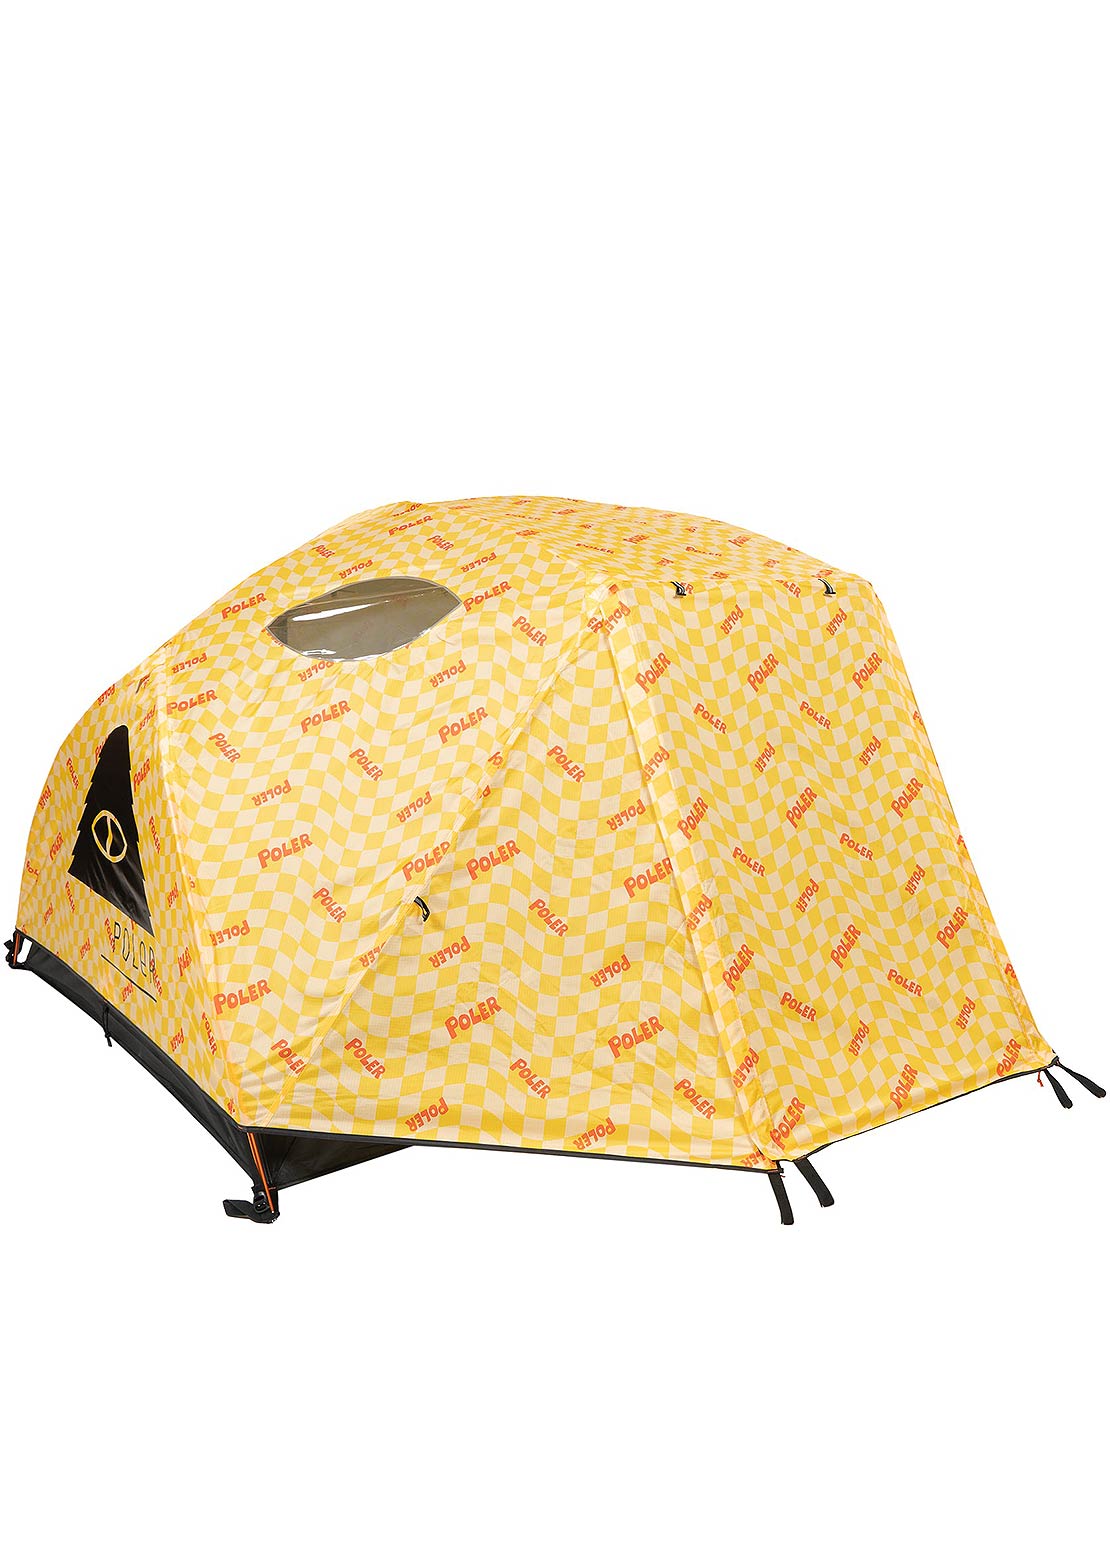 Poler 2 Person Tent Wavy Check Yellow